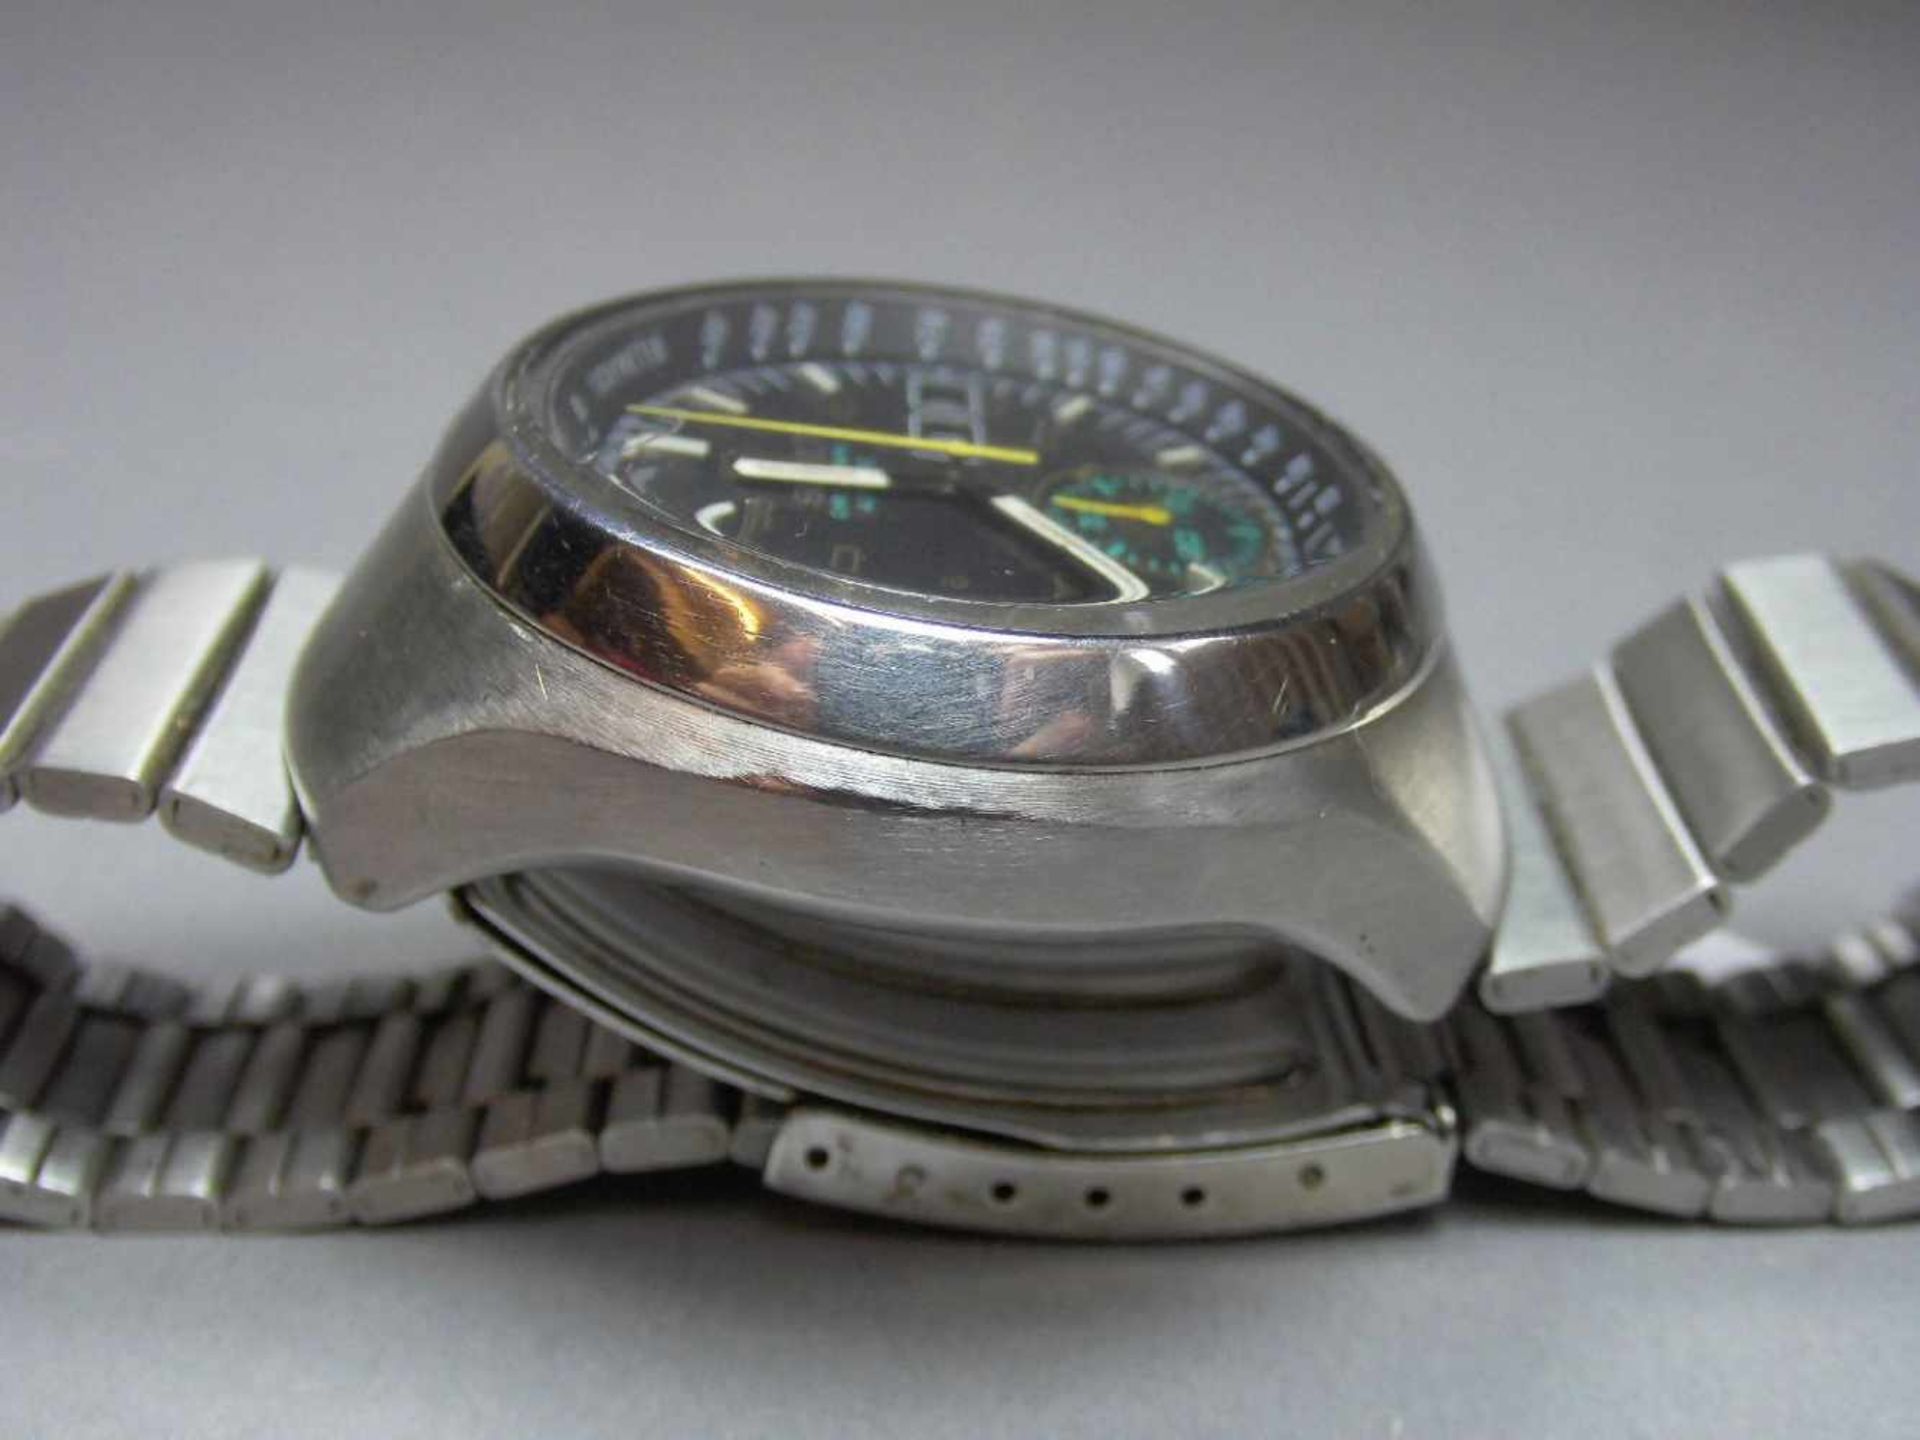 VINTAGE CHRONOGRAPH / ARMBANDUHR : SEIKO - 6139 - 7160 T / wristwatch, Japan, 1970er Jahre, - Image 4 of 8